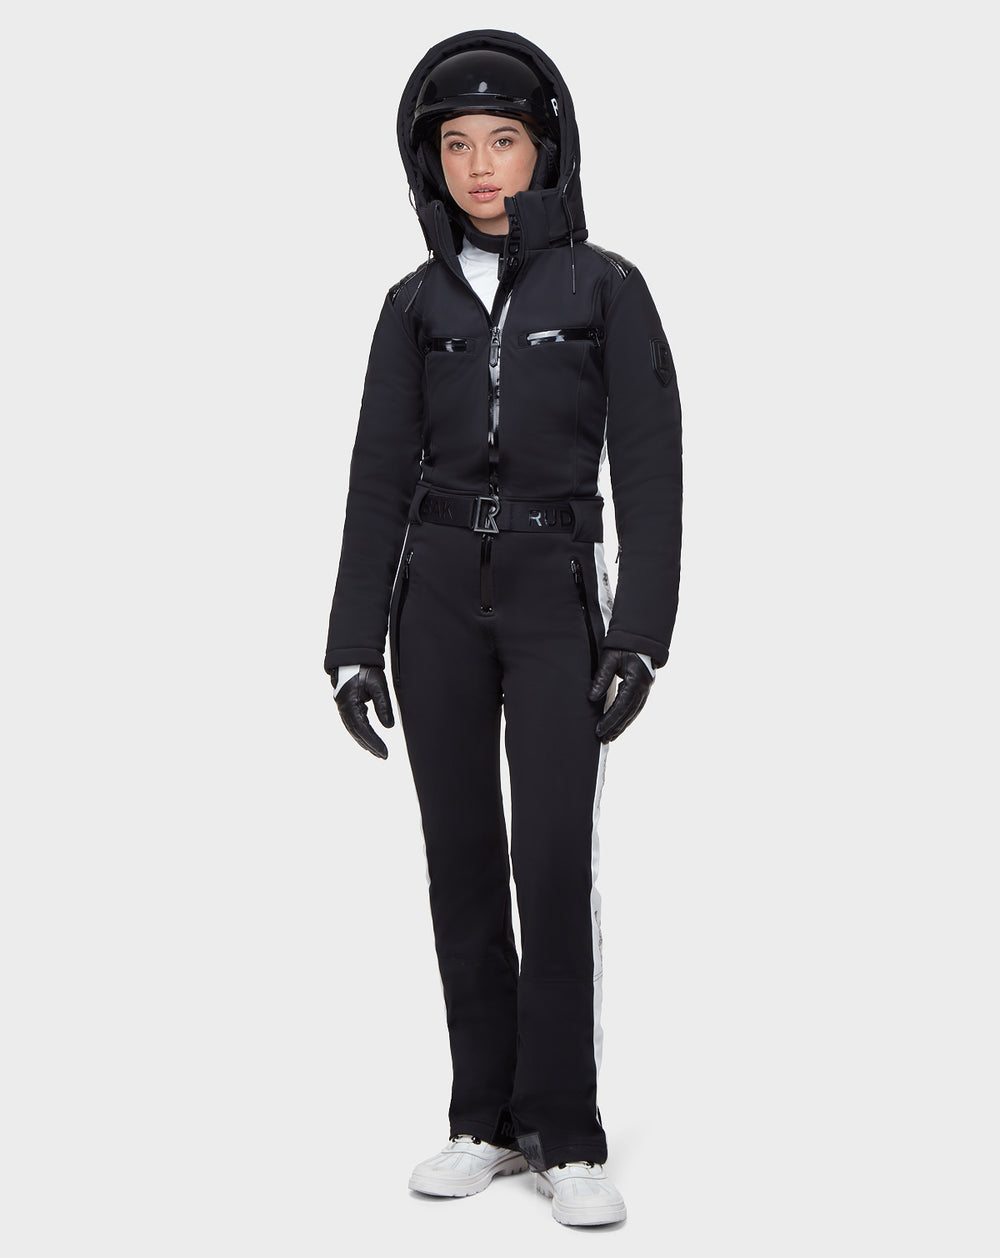 Women's ski suit MIRALY Black